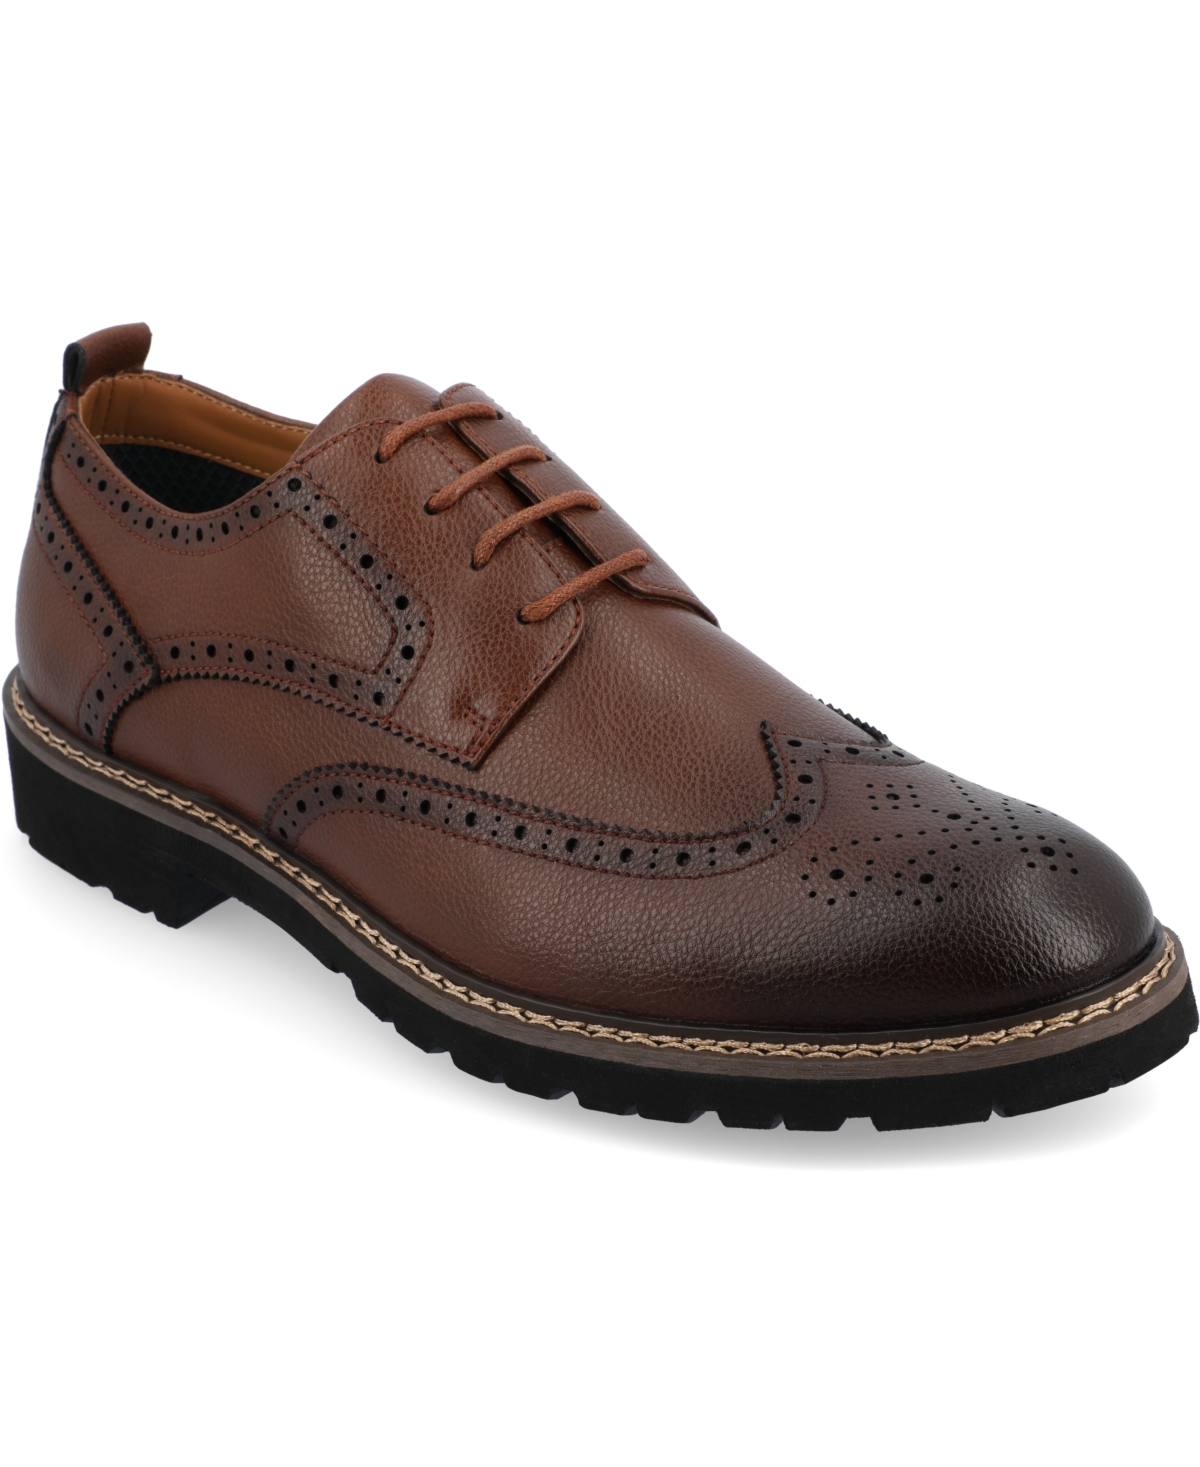 Men's Campbell Tru Comfort Foam Wingtip Lace-Up Derby Shoes - Brown